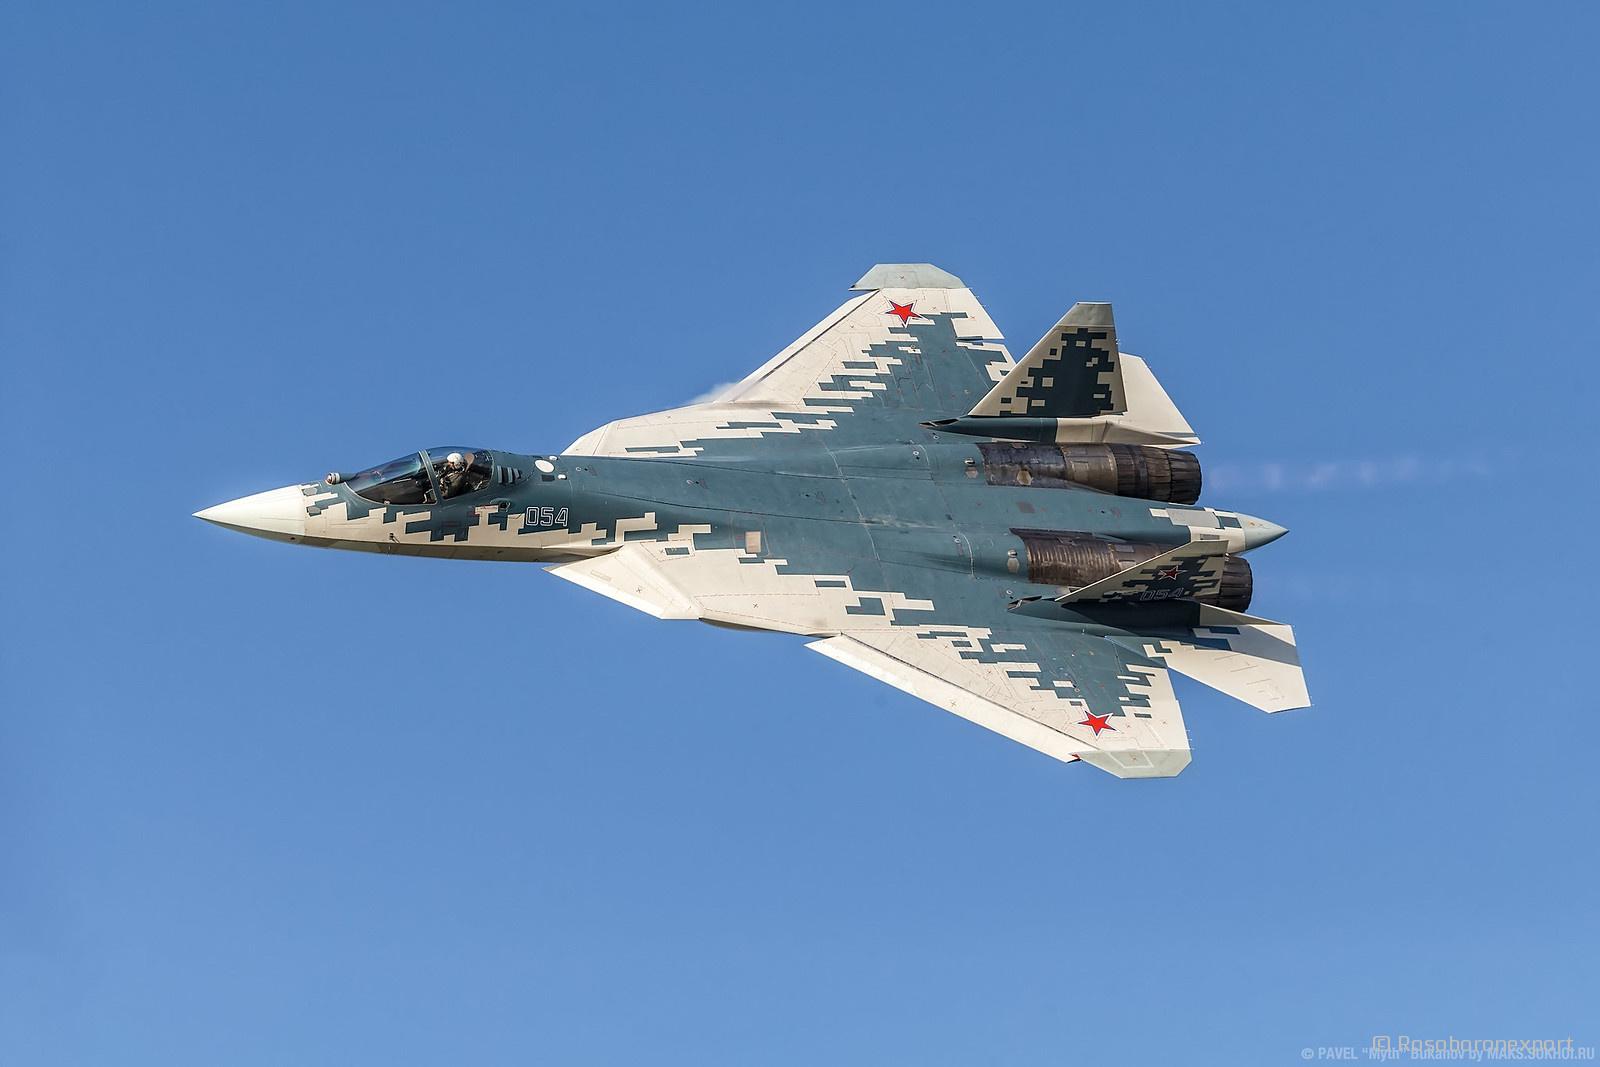 Sukhoi Su-57 Felon Stealth Multirole Fighter